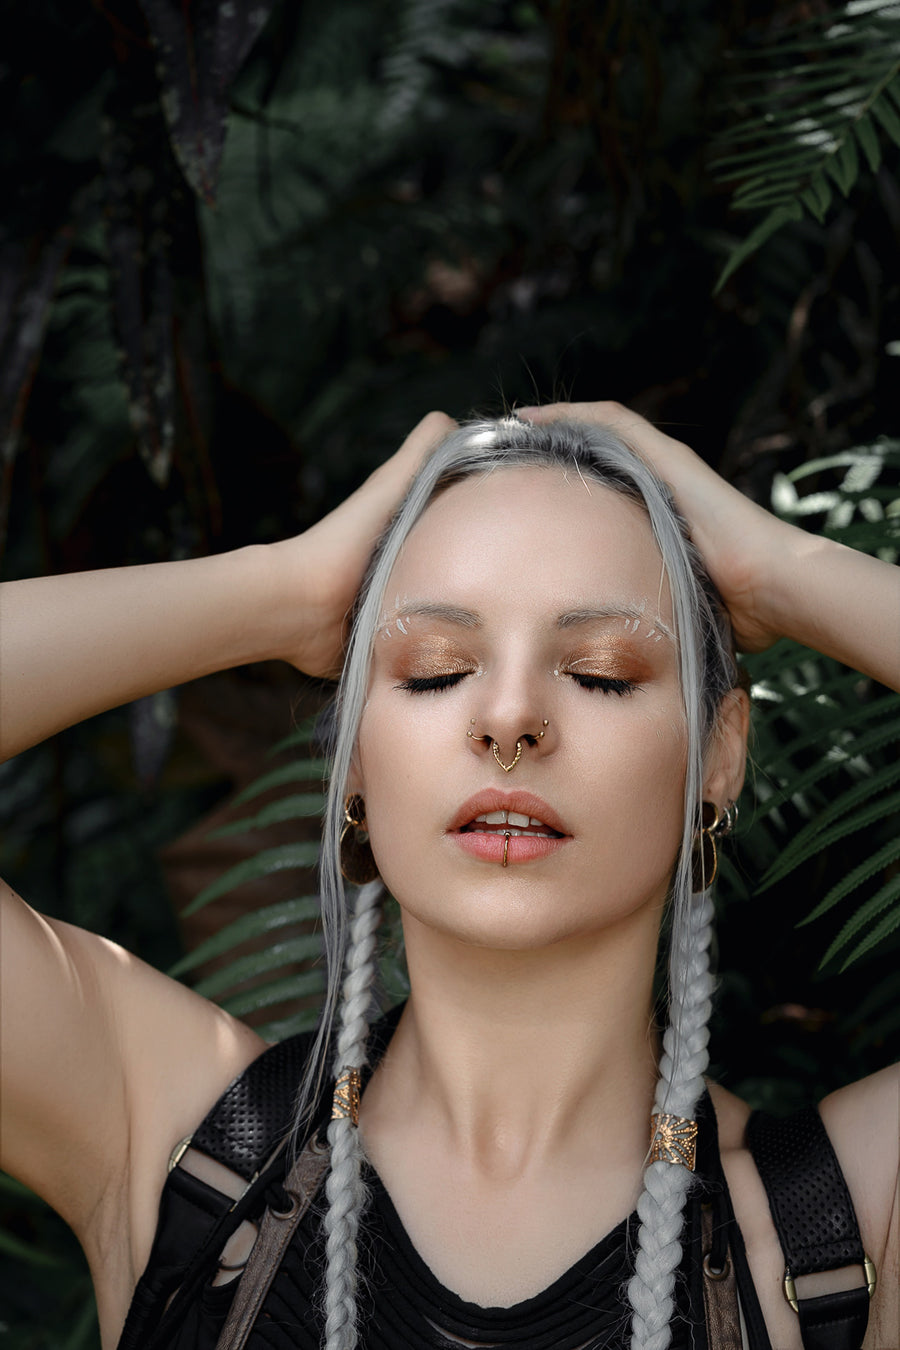 V-shaped septum piercing, alien bio-organic design, platinum blonde hair, leafy backdrop, distinctive statement piece, avant-garde body art.